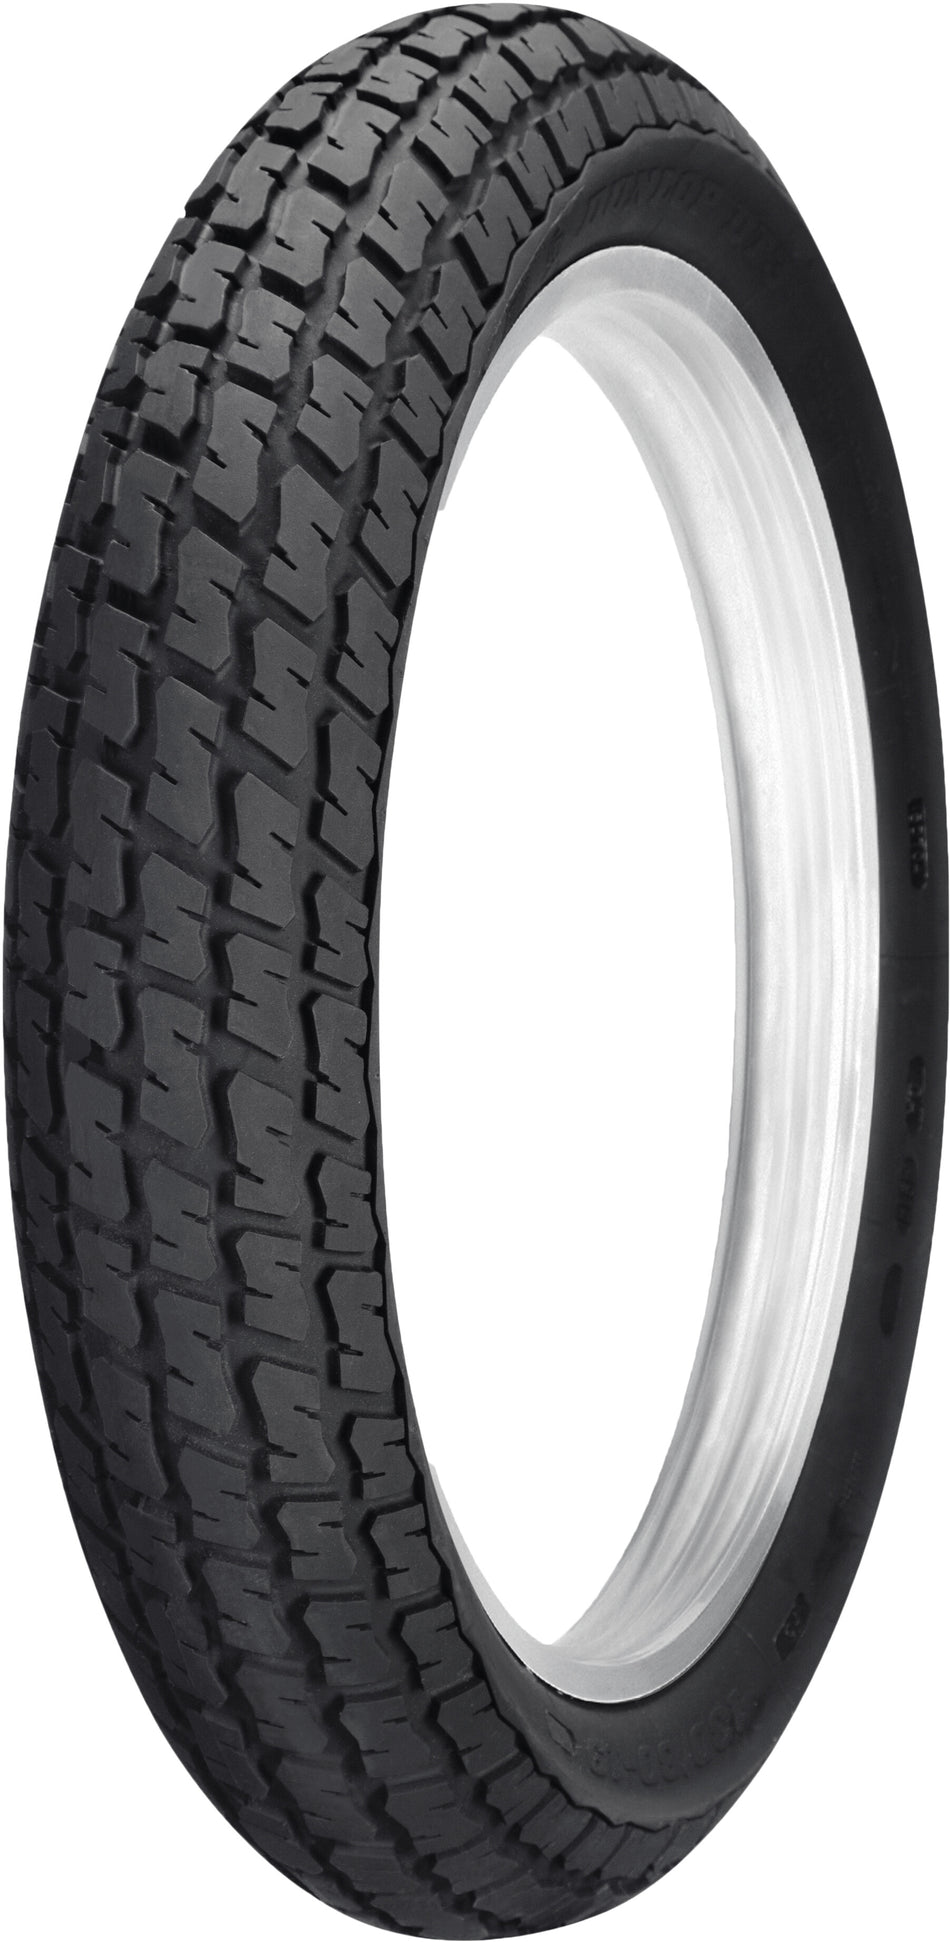 DUNLOP Tire K180a Flat Track Front 130/80-19 67h Bias Tl 45241428